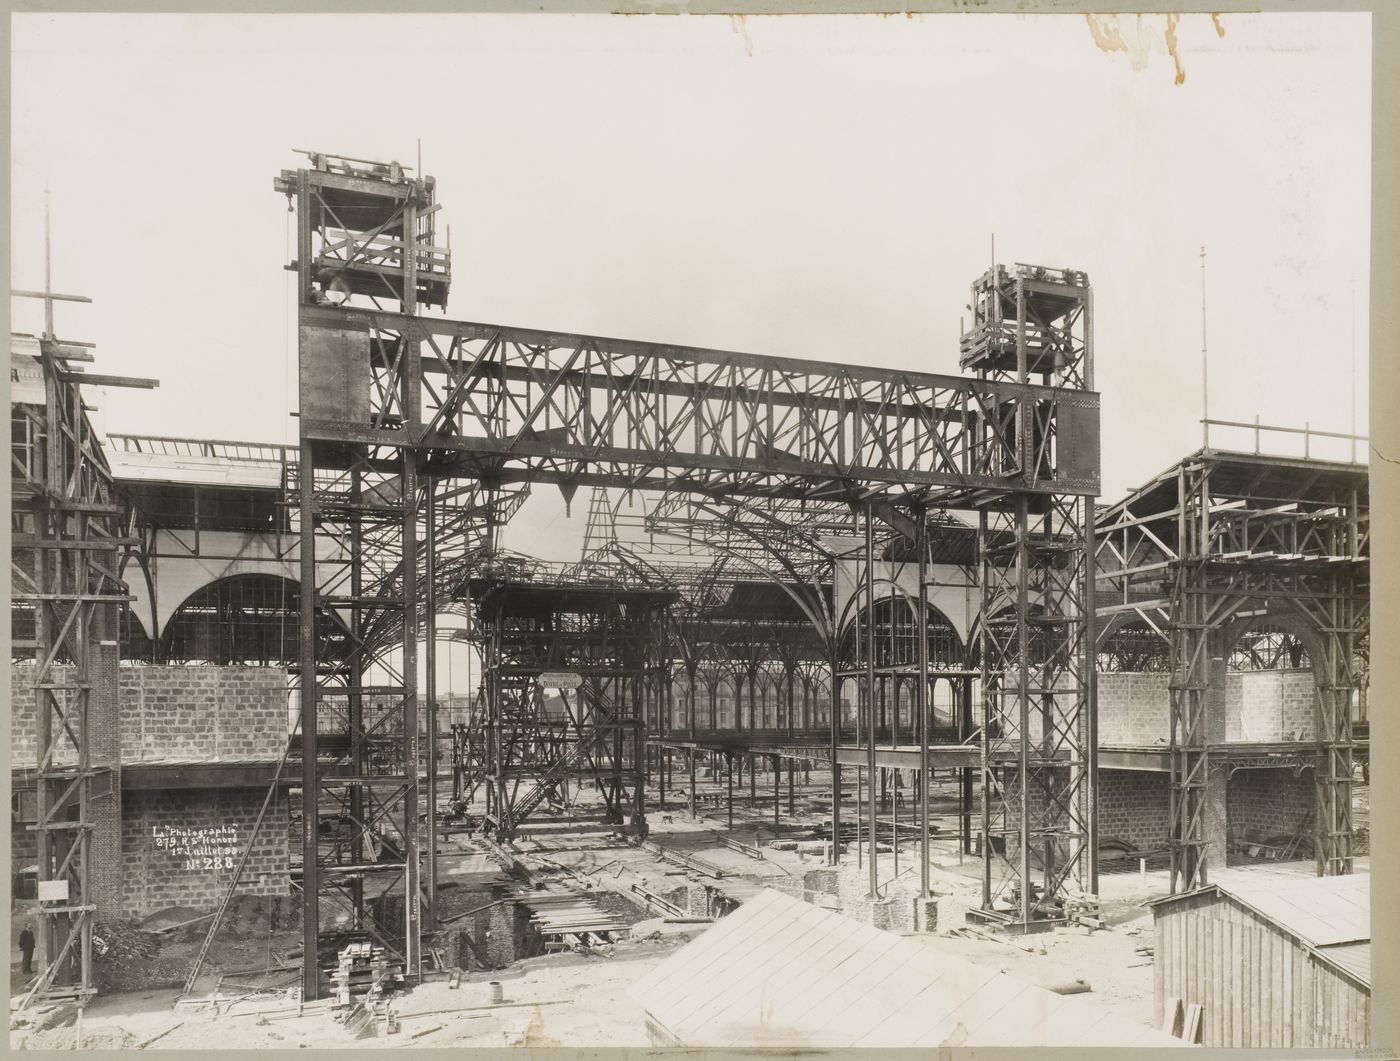 Exposition universelle internationale de 1900 (Paris, France): View of construction for the exposition